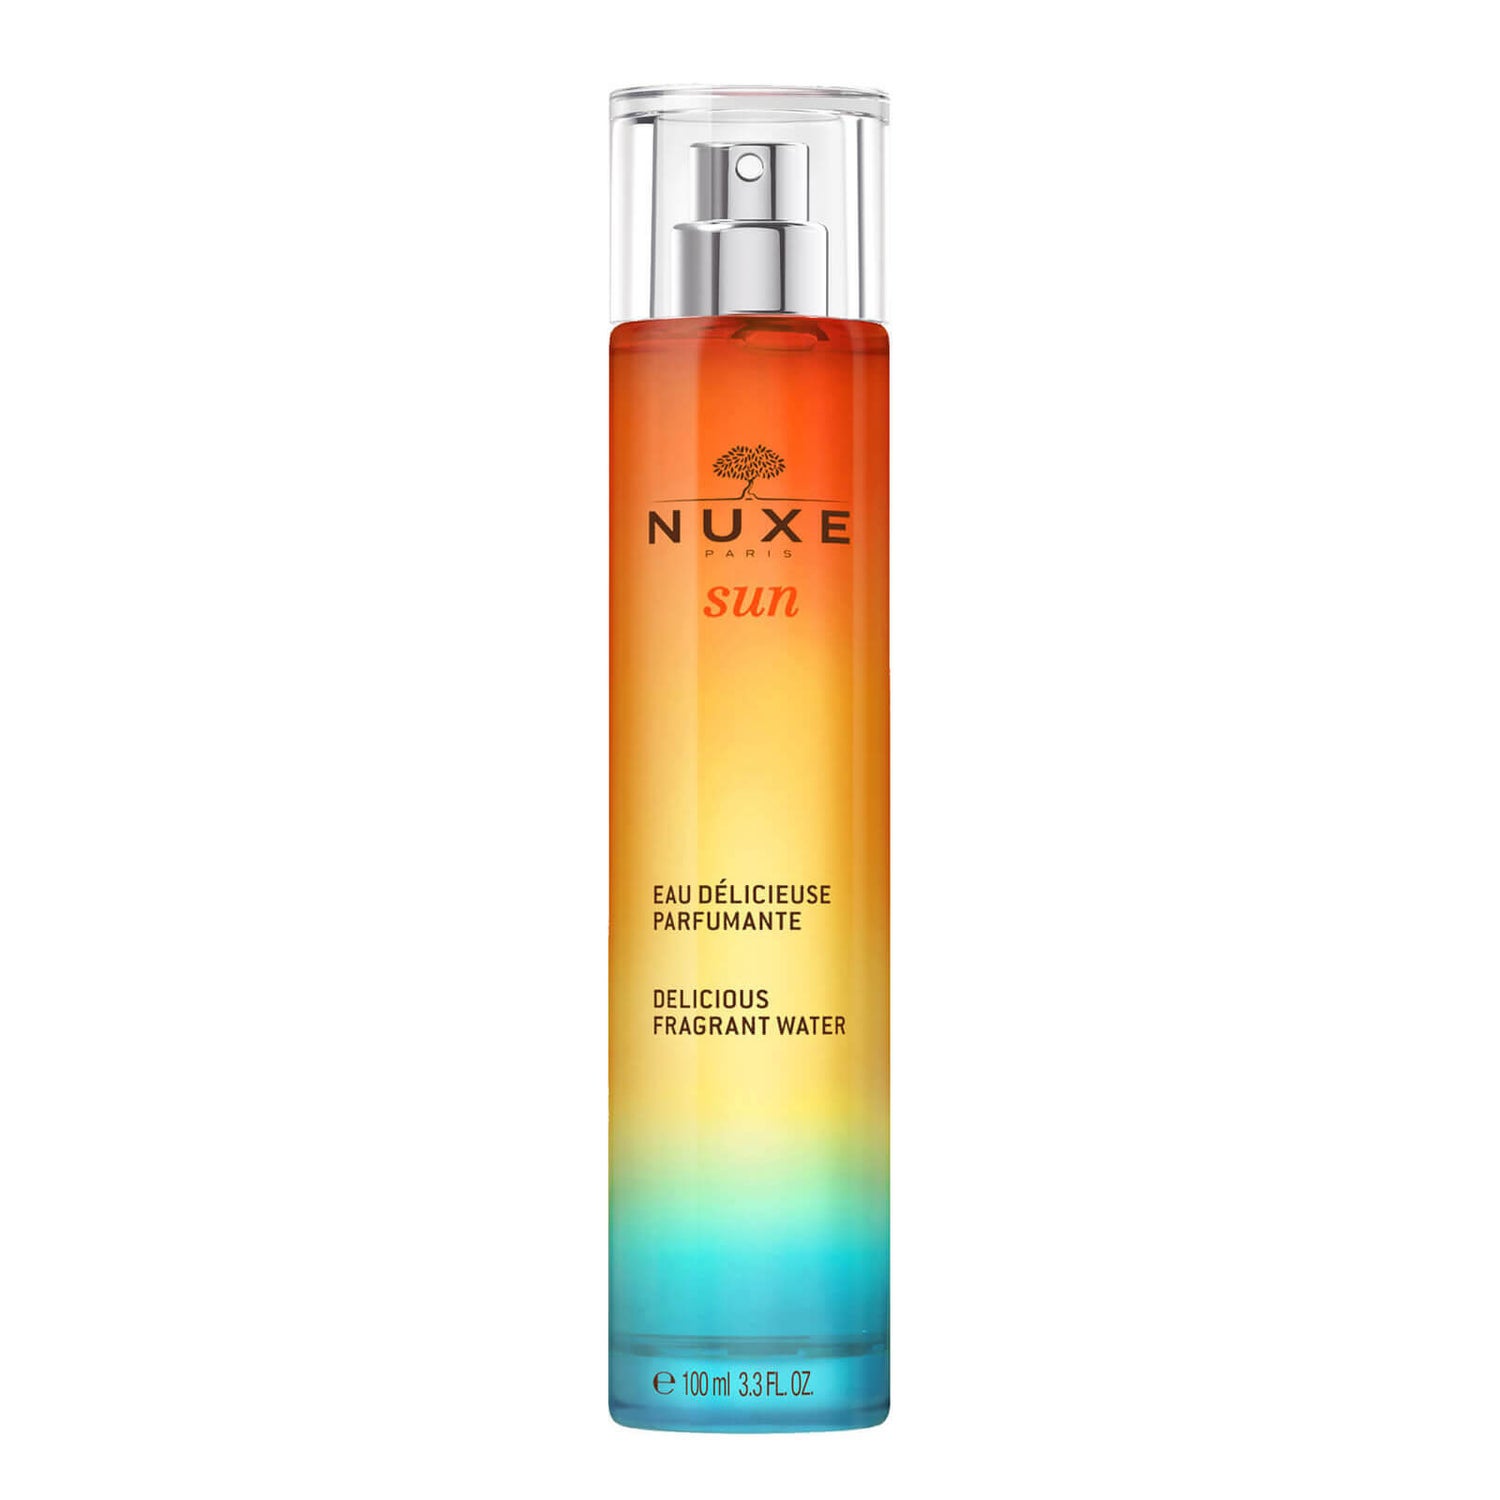 Delicious Fragrant Water, NUXE Sun 100 ml